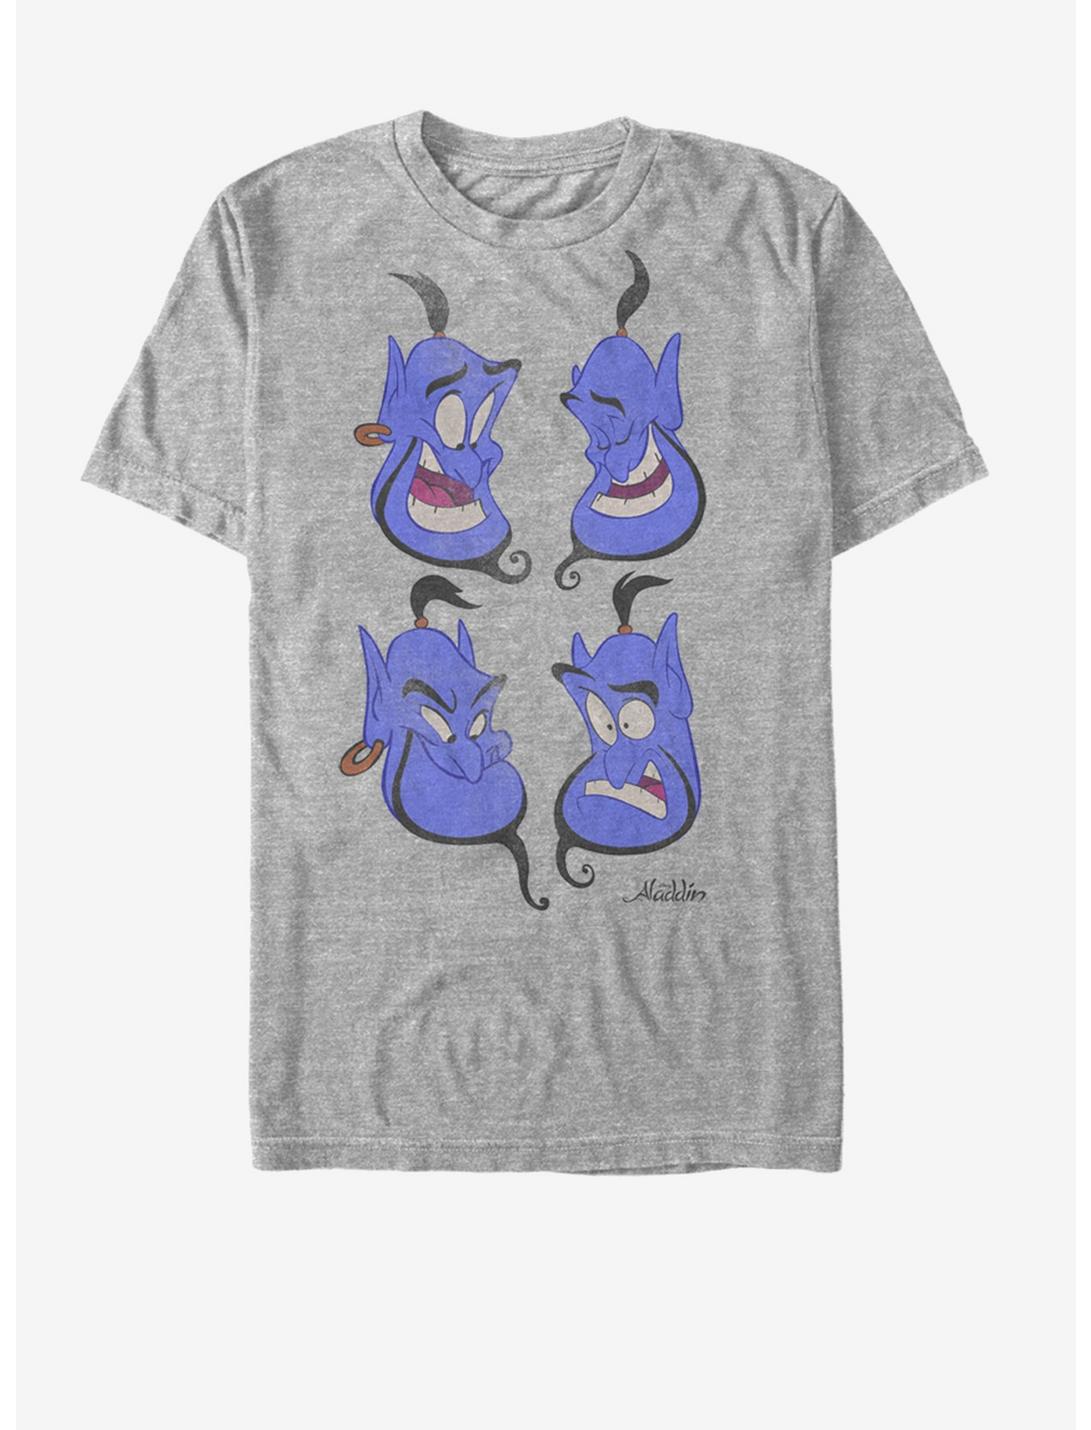 Disney Aladdin Genie Faces T-Shirt, ATH HTR, hi-res